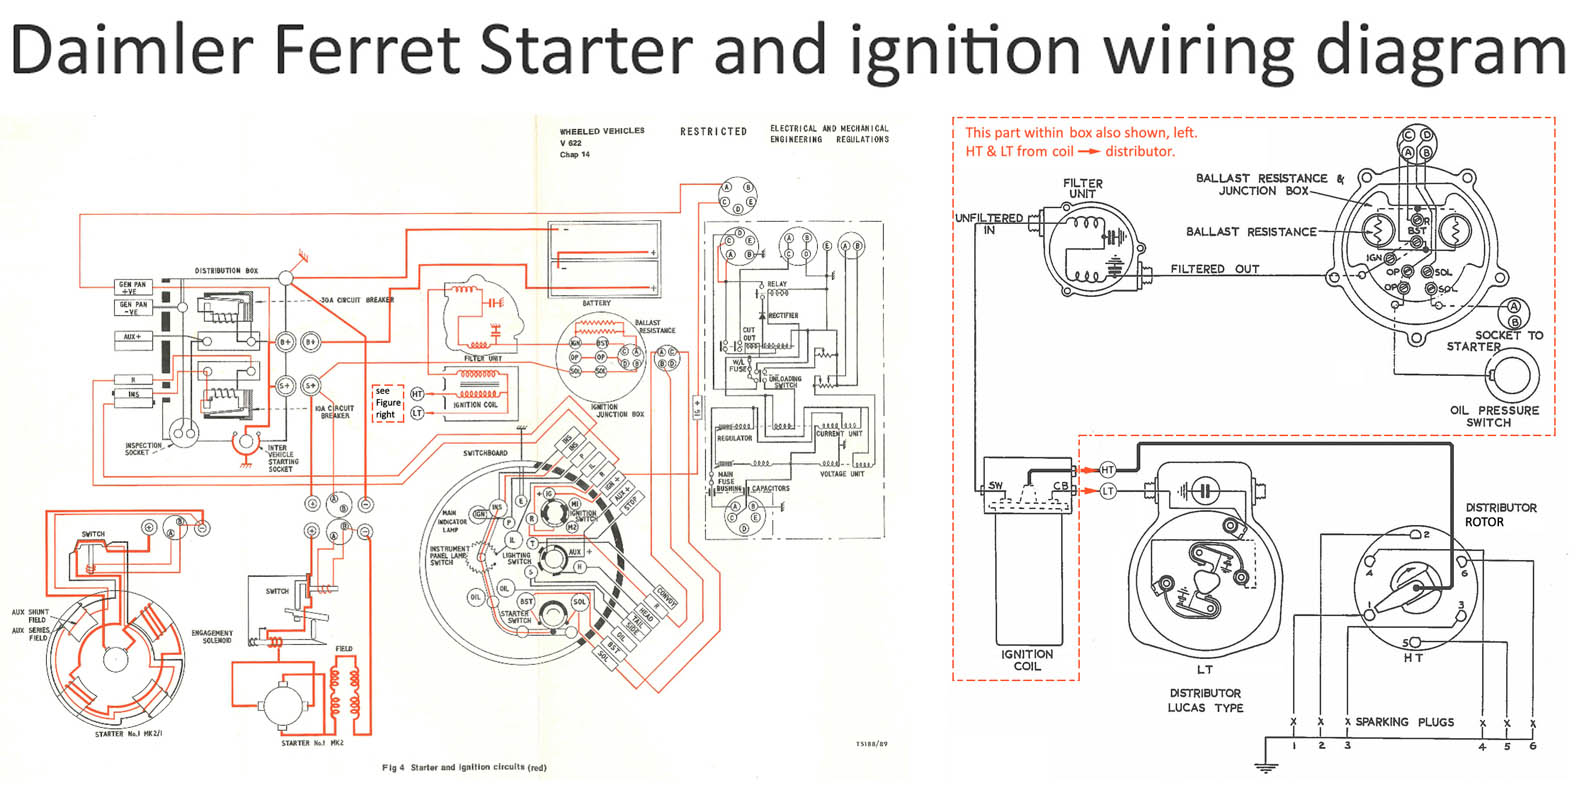 Daimler Ferret starter and ignition wiring diagram jpeg